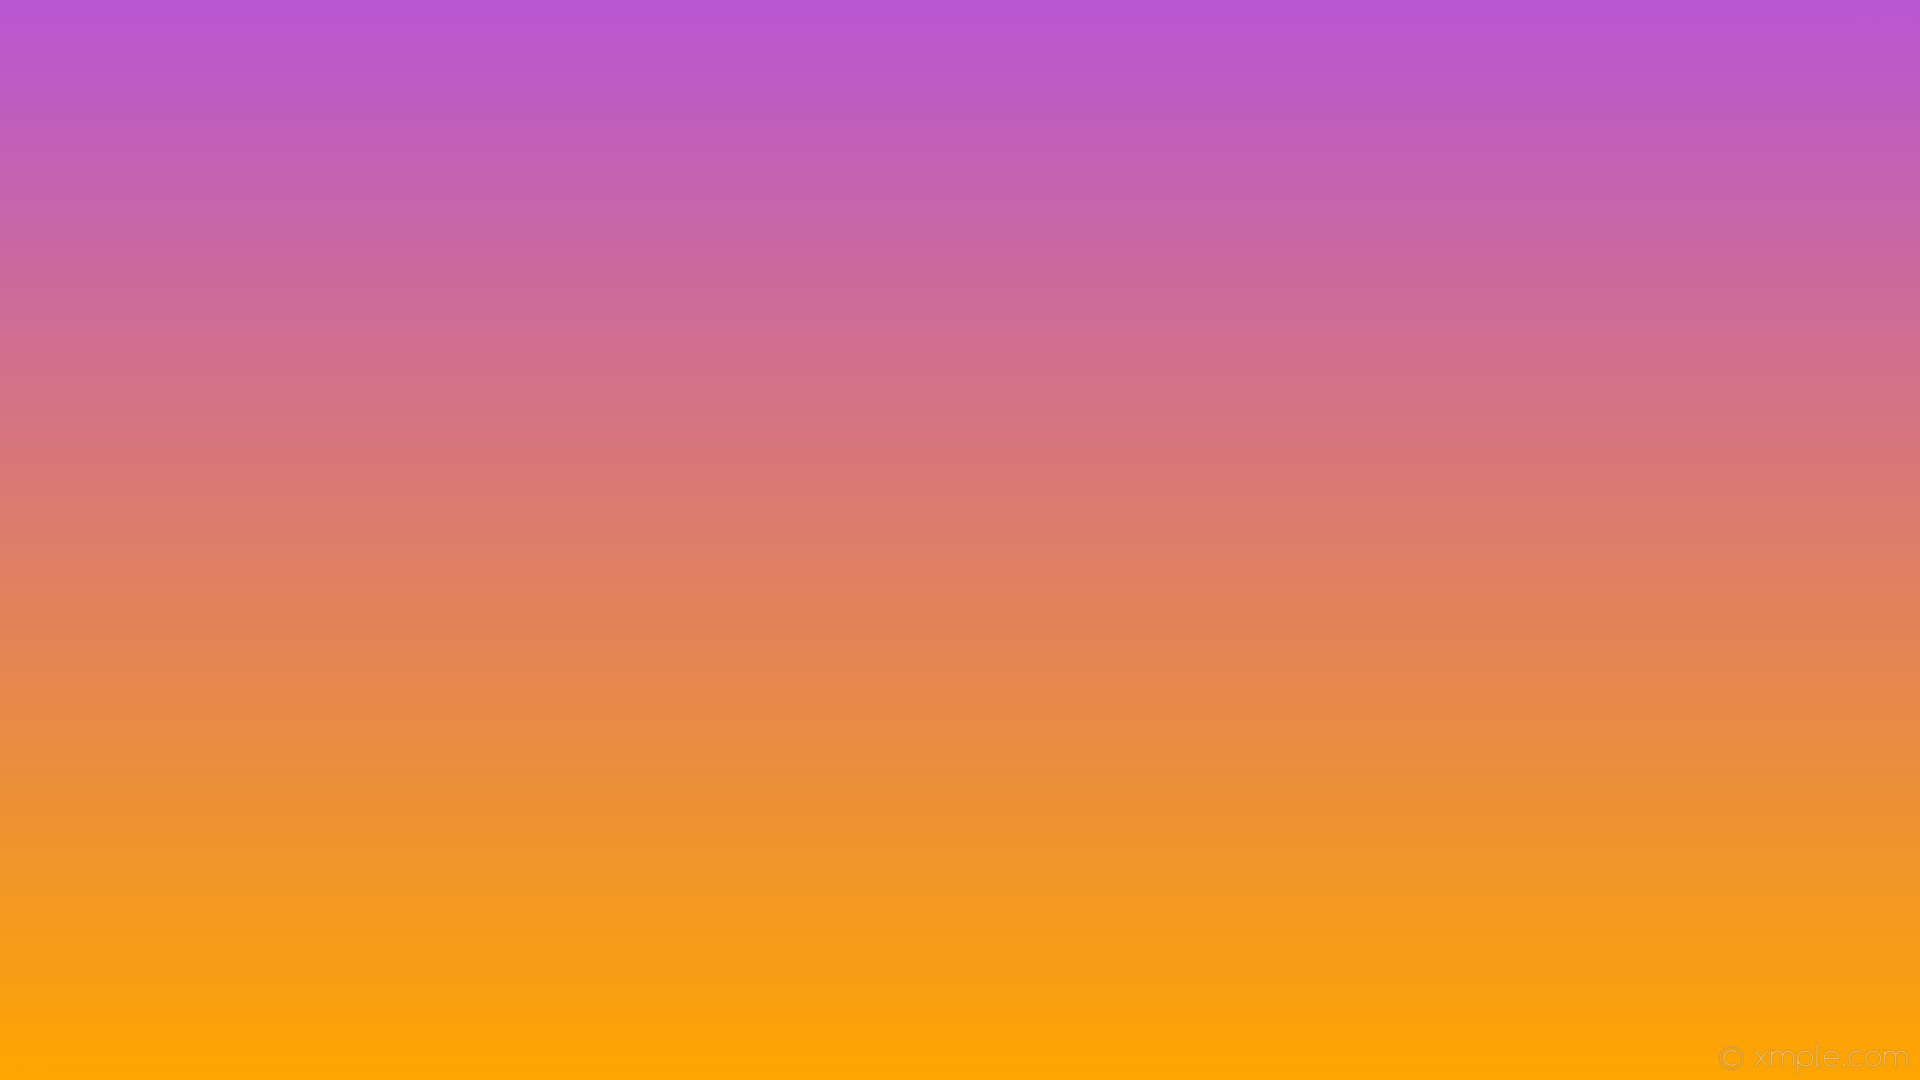 Wallpaper orange purple gradient linear medium orchid #ba55d3 #ffa500 90